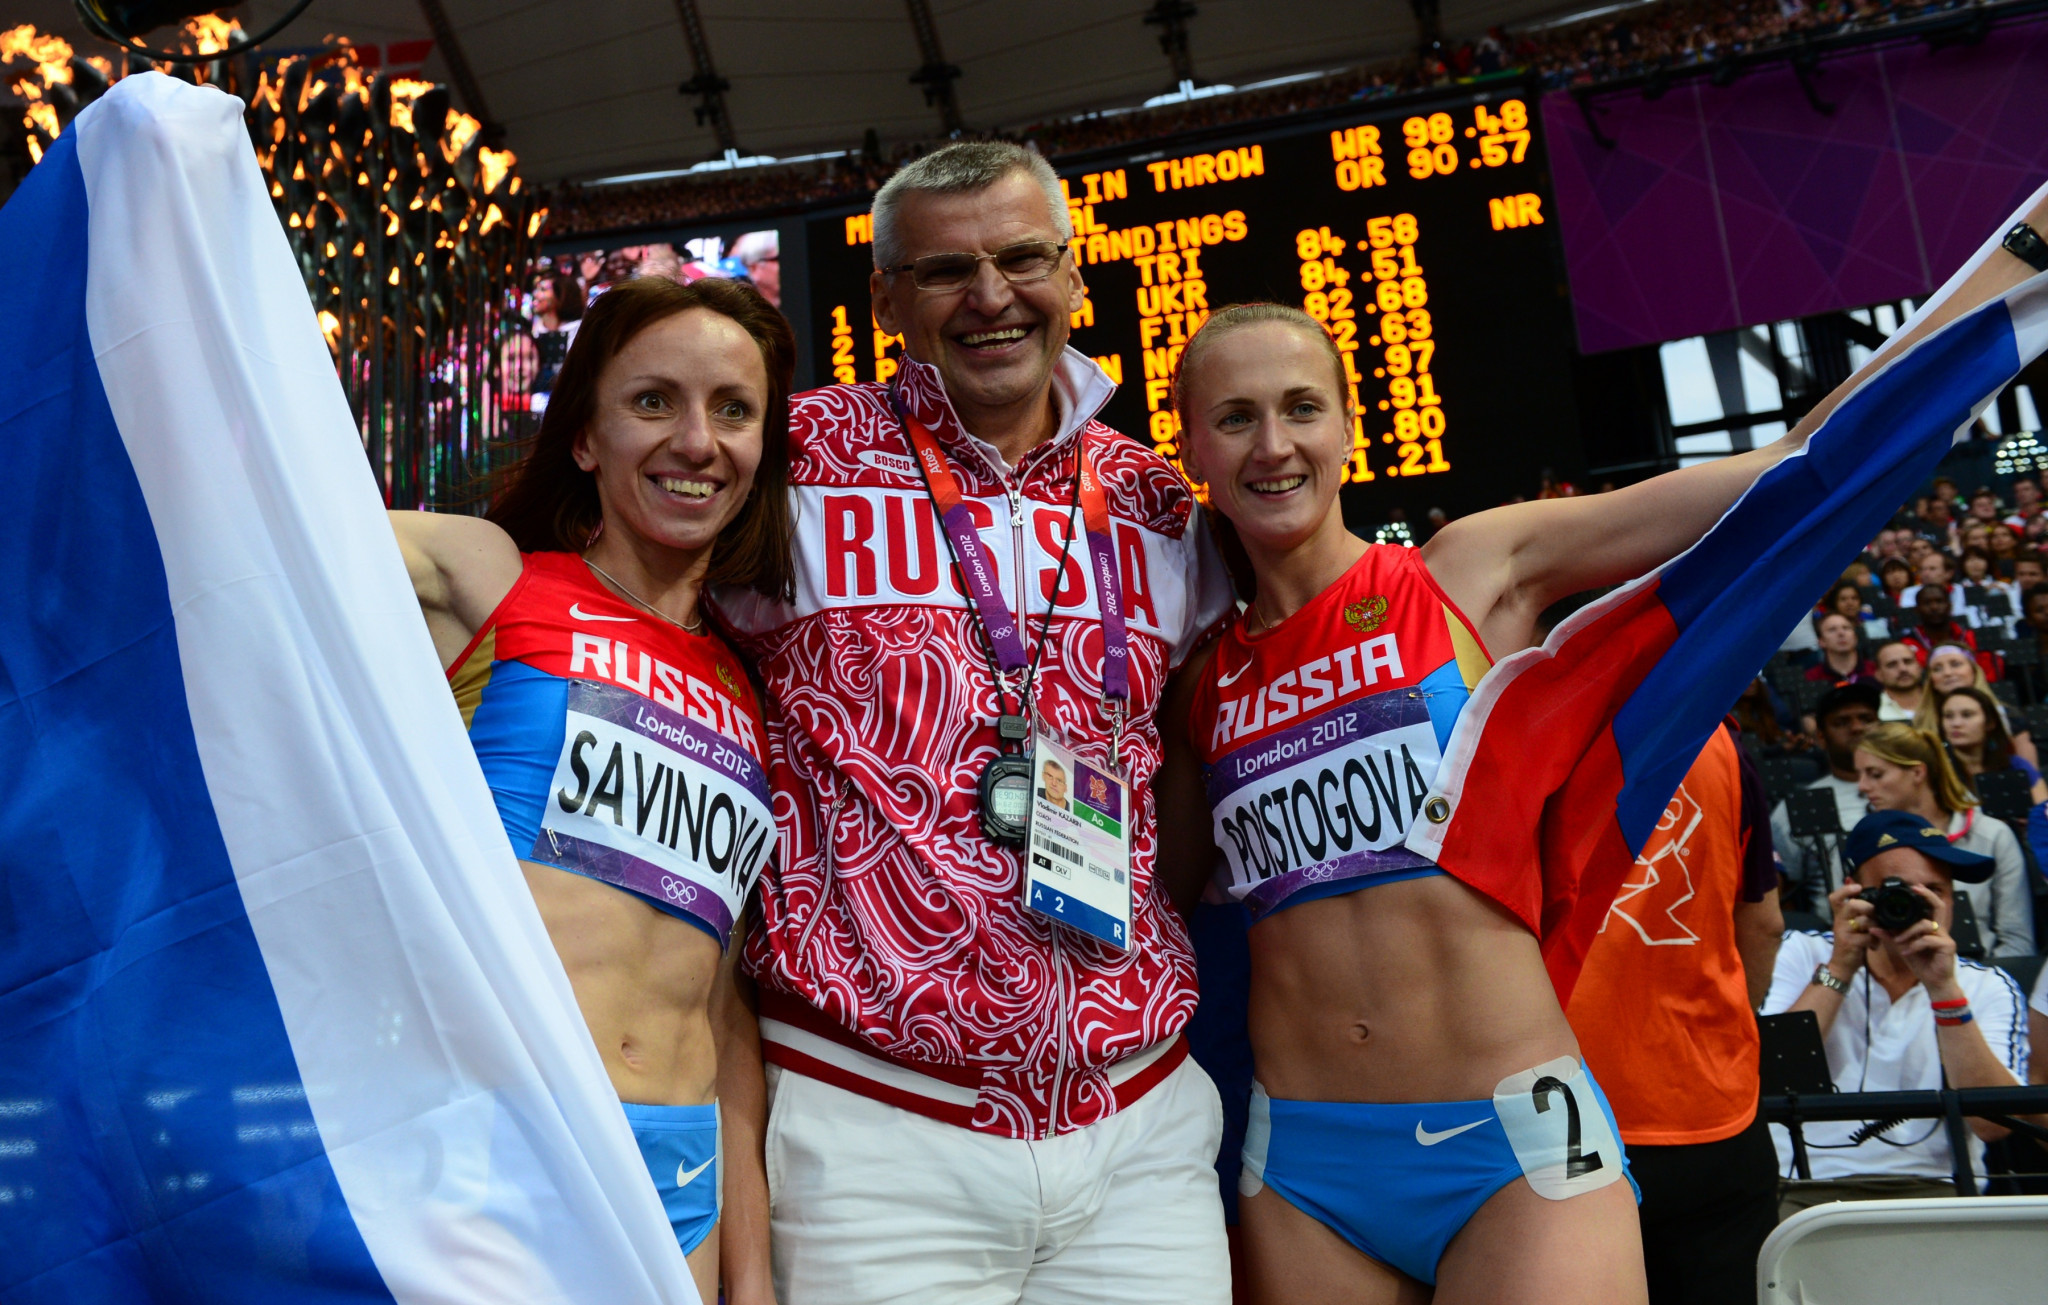 Russian athletics coach Kazarin admits breaching lifetime ban from sport